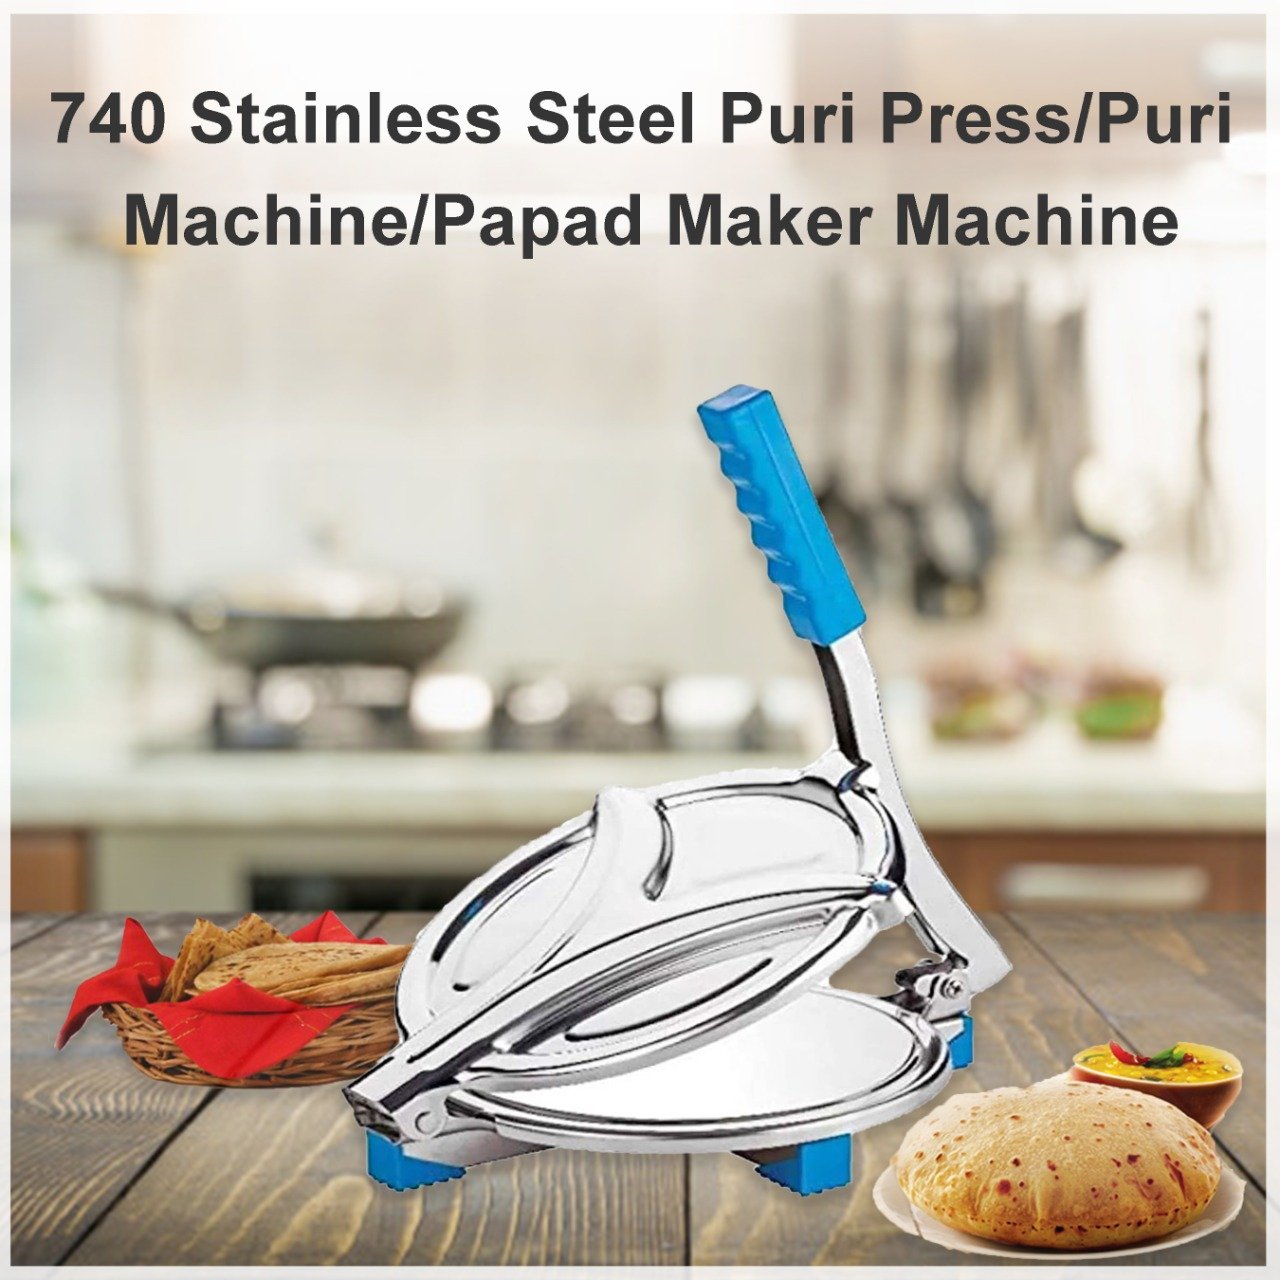 0740 Stainless Steel Puri Press/Puri Machine/Papad Maker Machine - SkyShopy